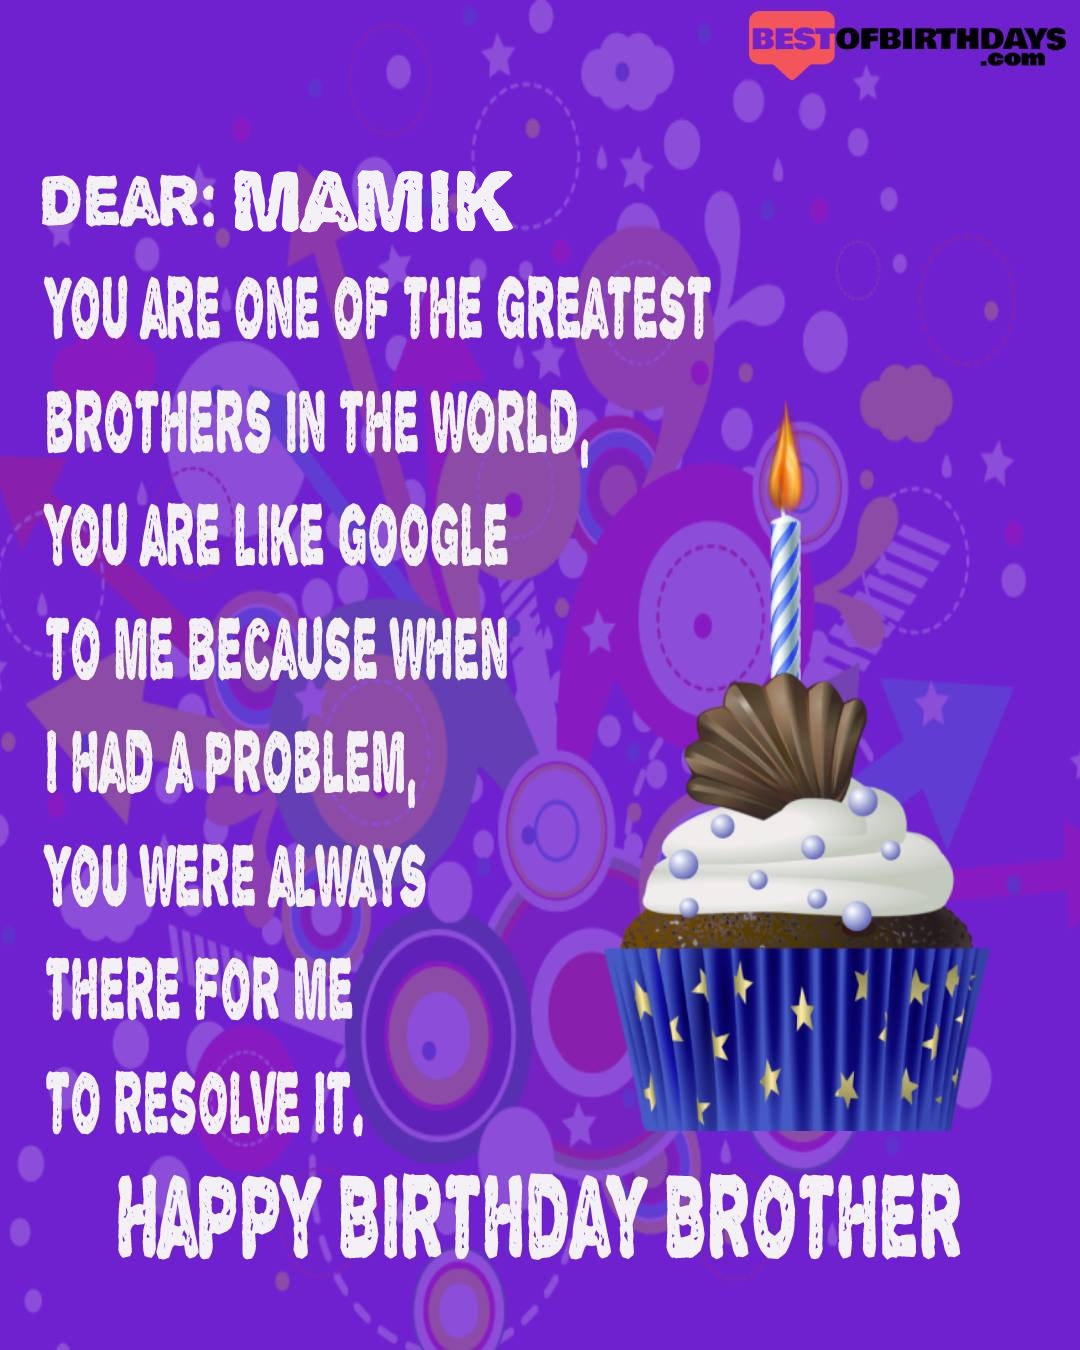 Happy birthday mamik bhai brother bro